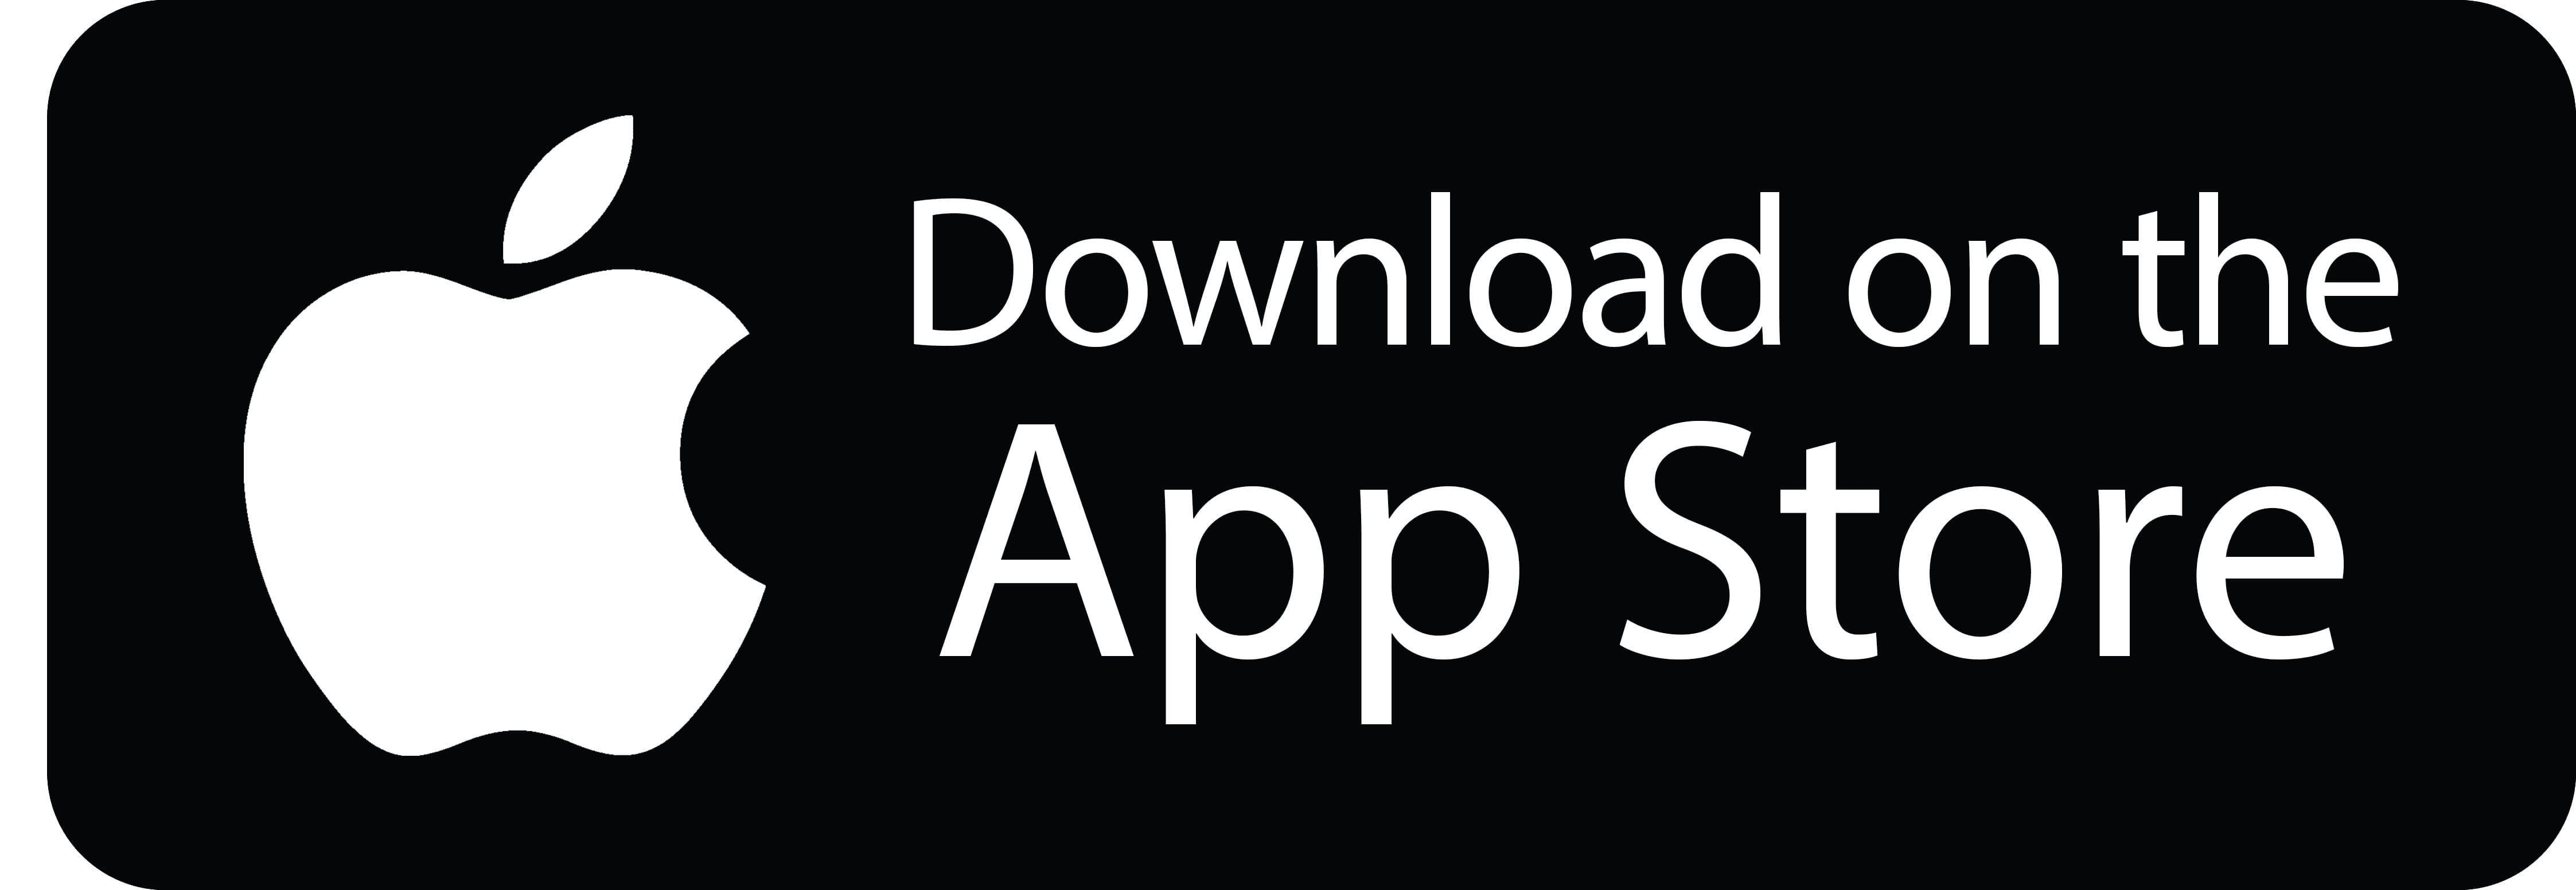 Download PrestoShopper on the App Store